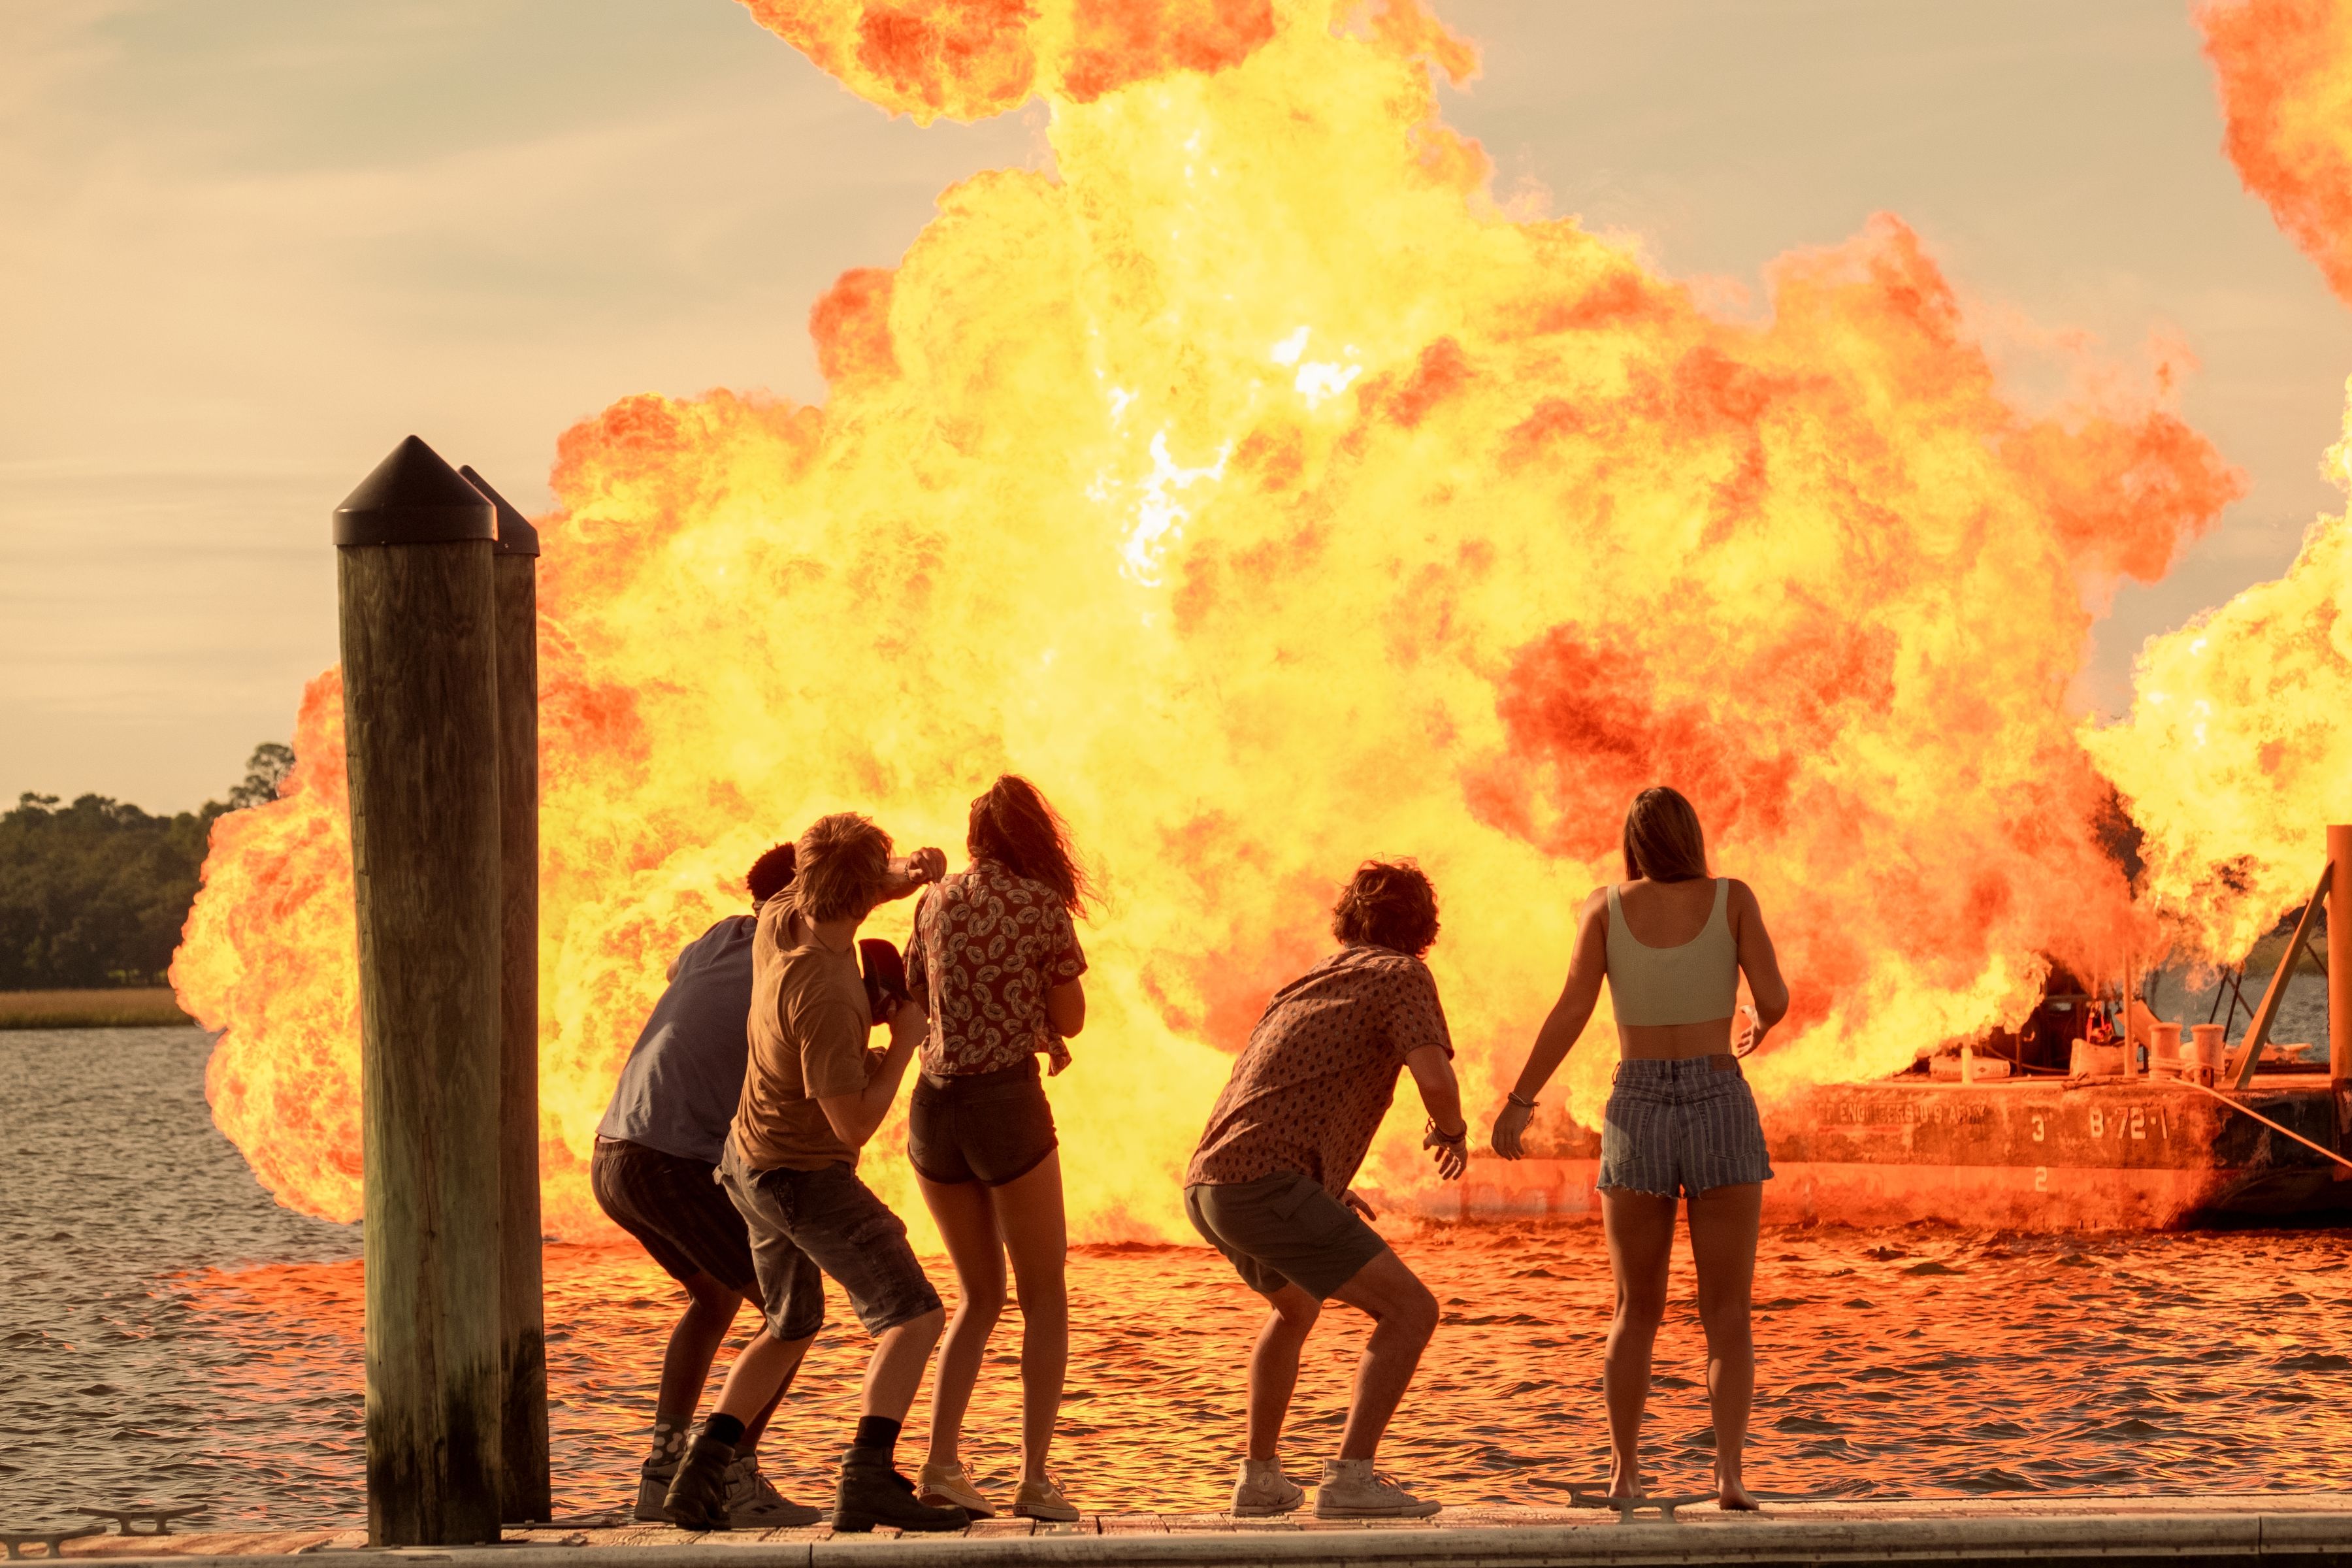 Outer Banks' Season 2 Recap: 6 Things to Remember Before Season 3